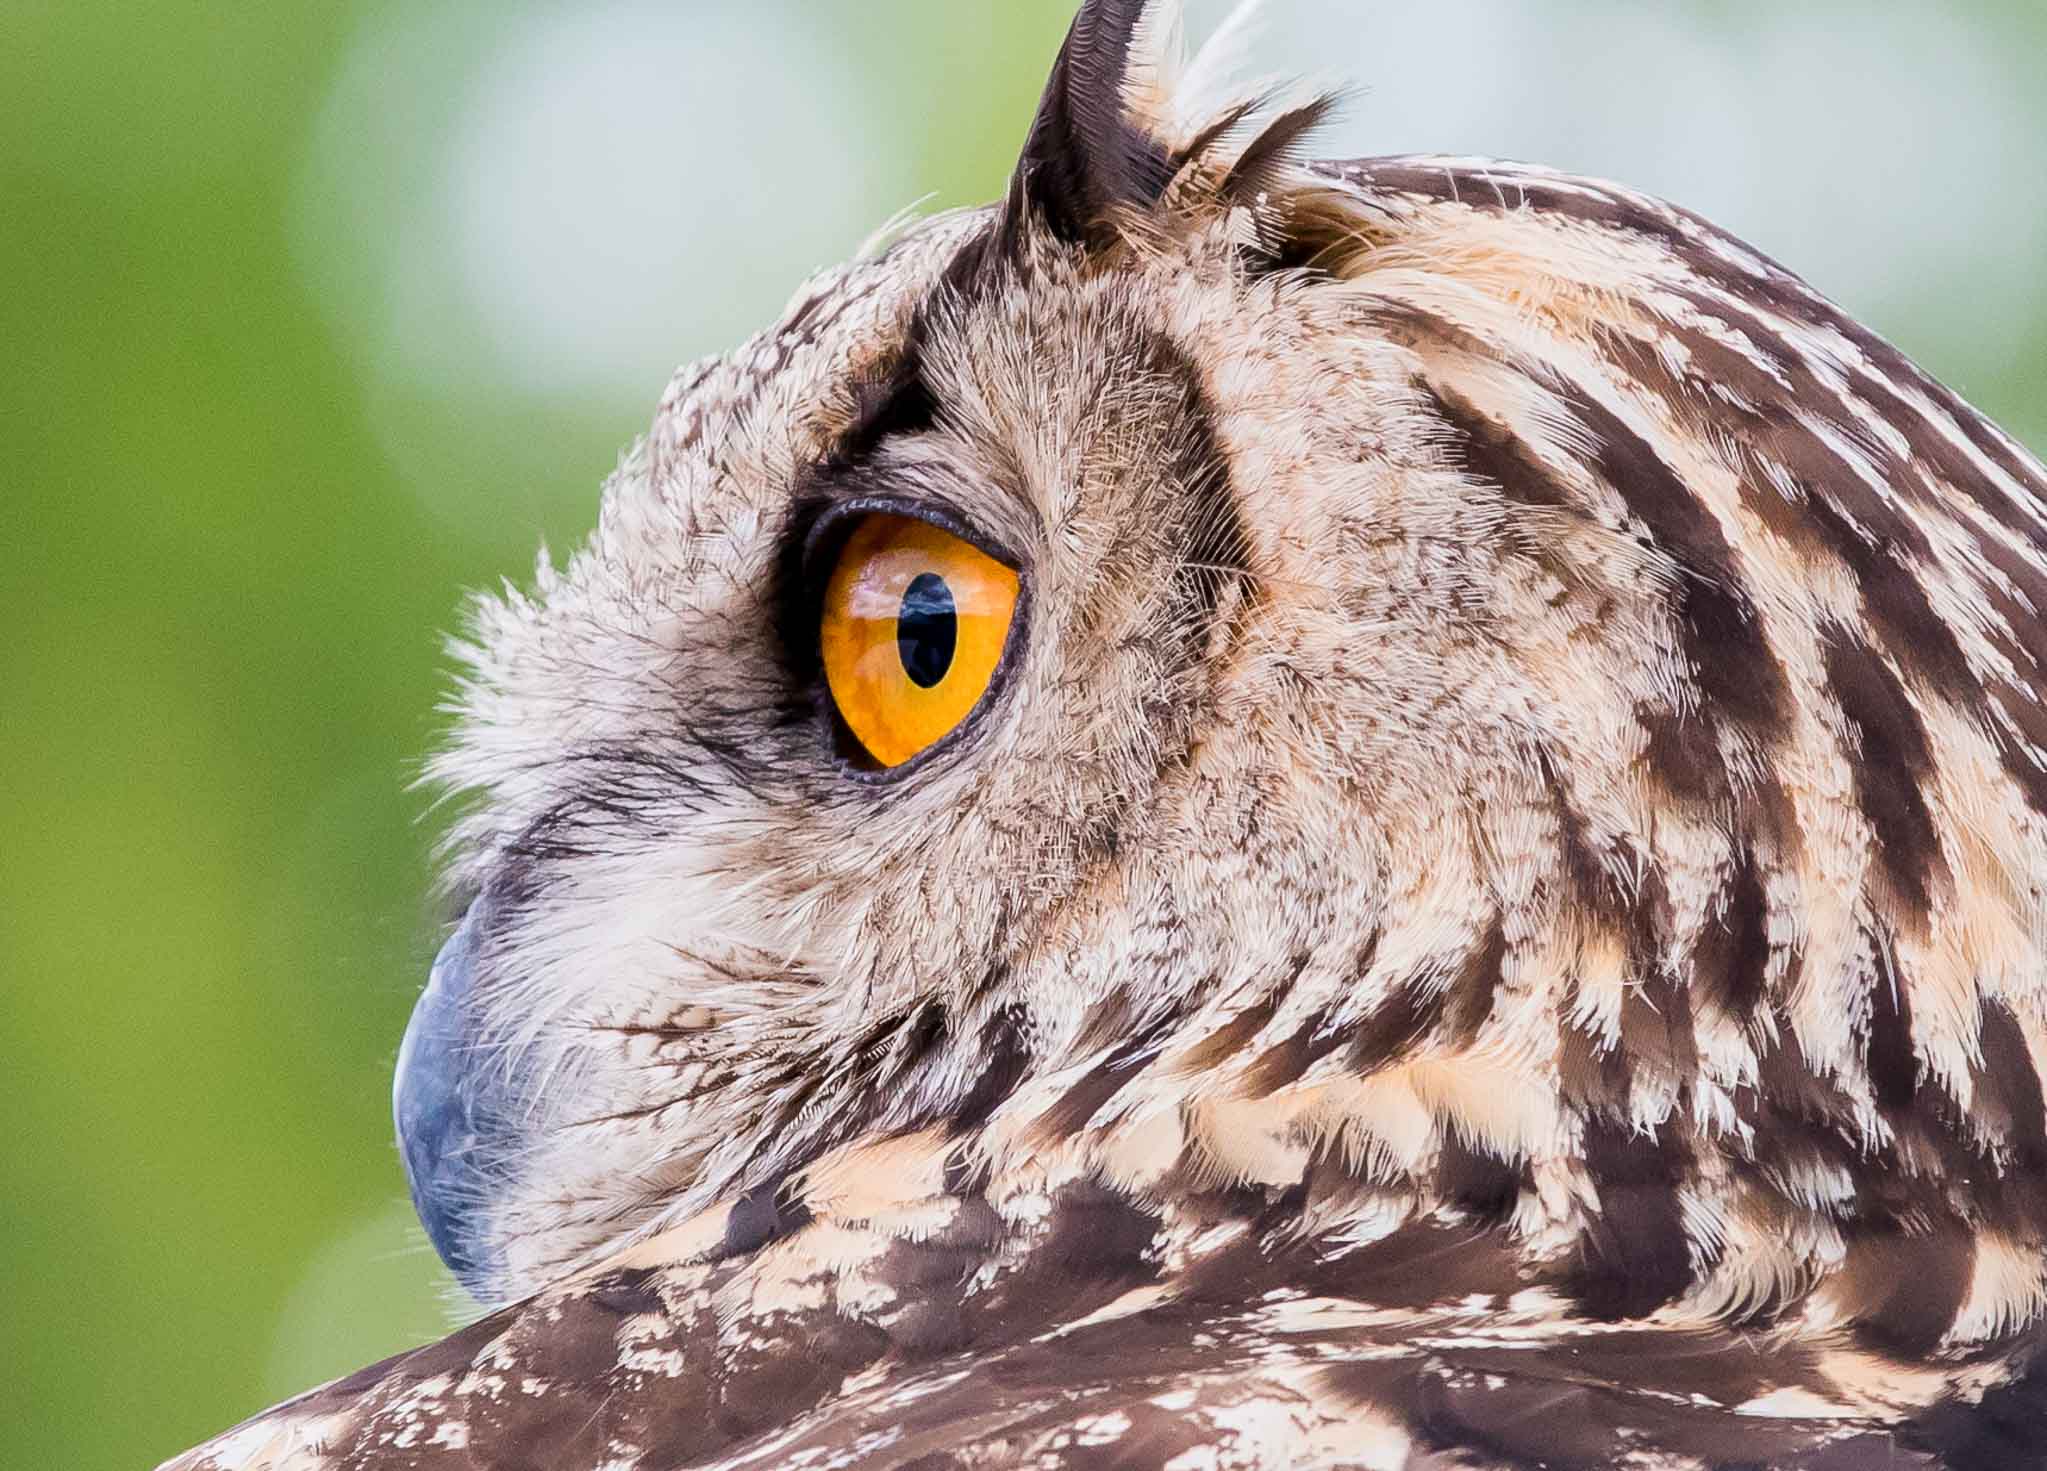 Eurasian Eagle-owl, The Raptor Project show, Berkshire Mall, Lanesboro MA, August 8, 2015